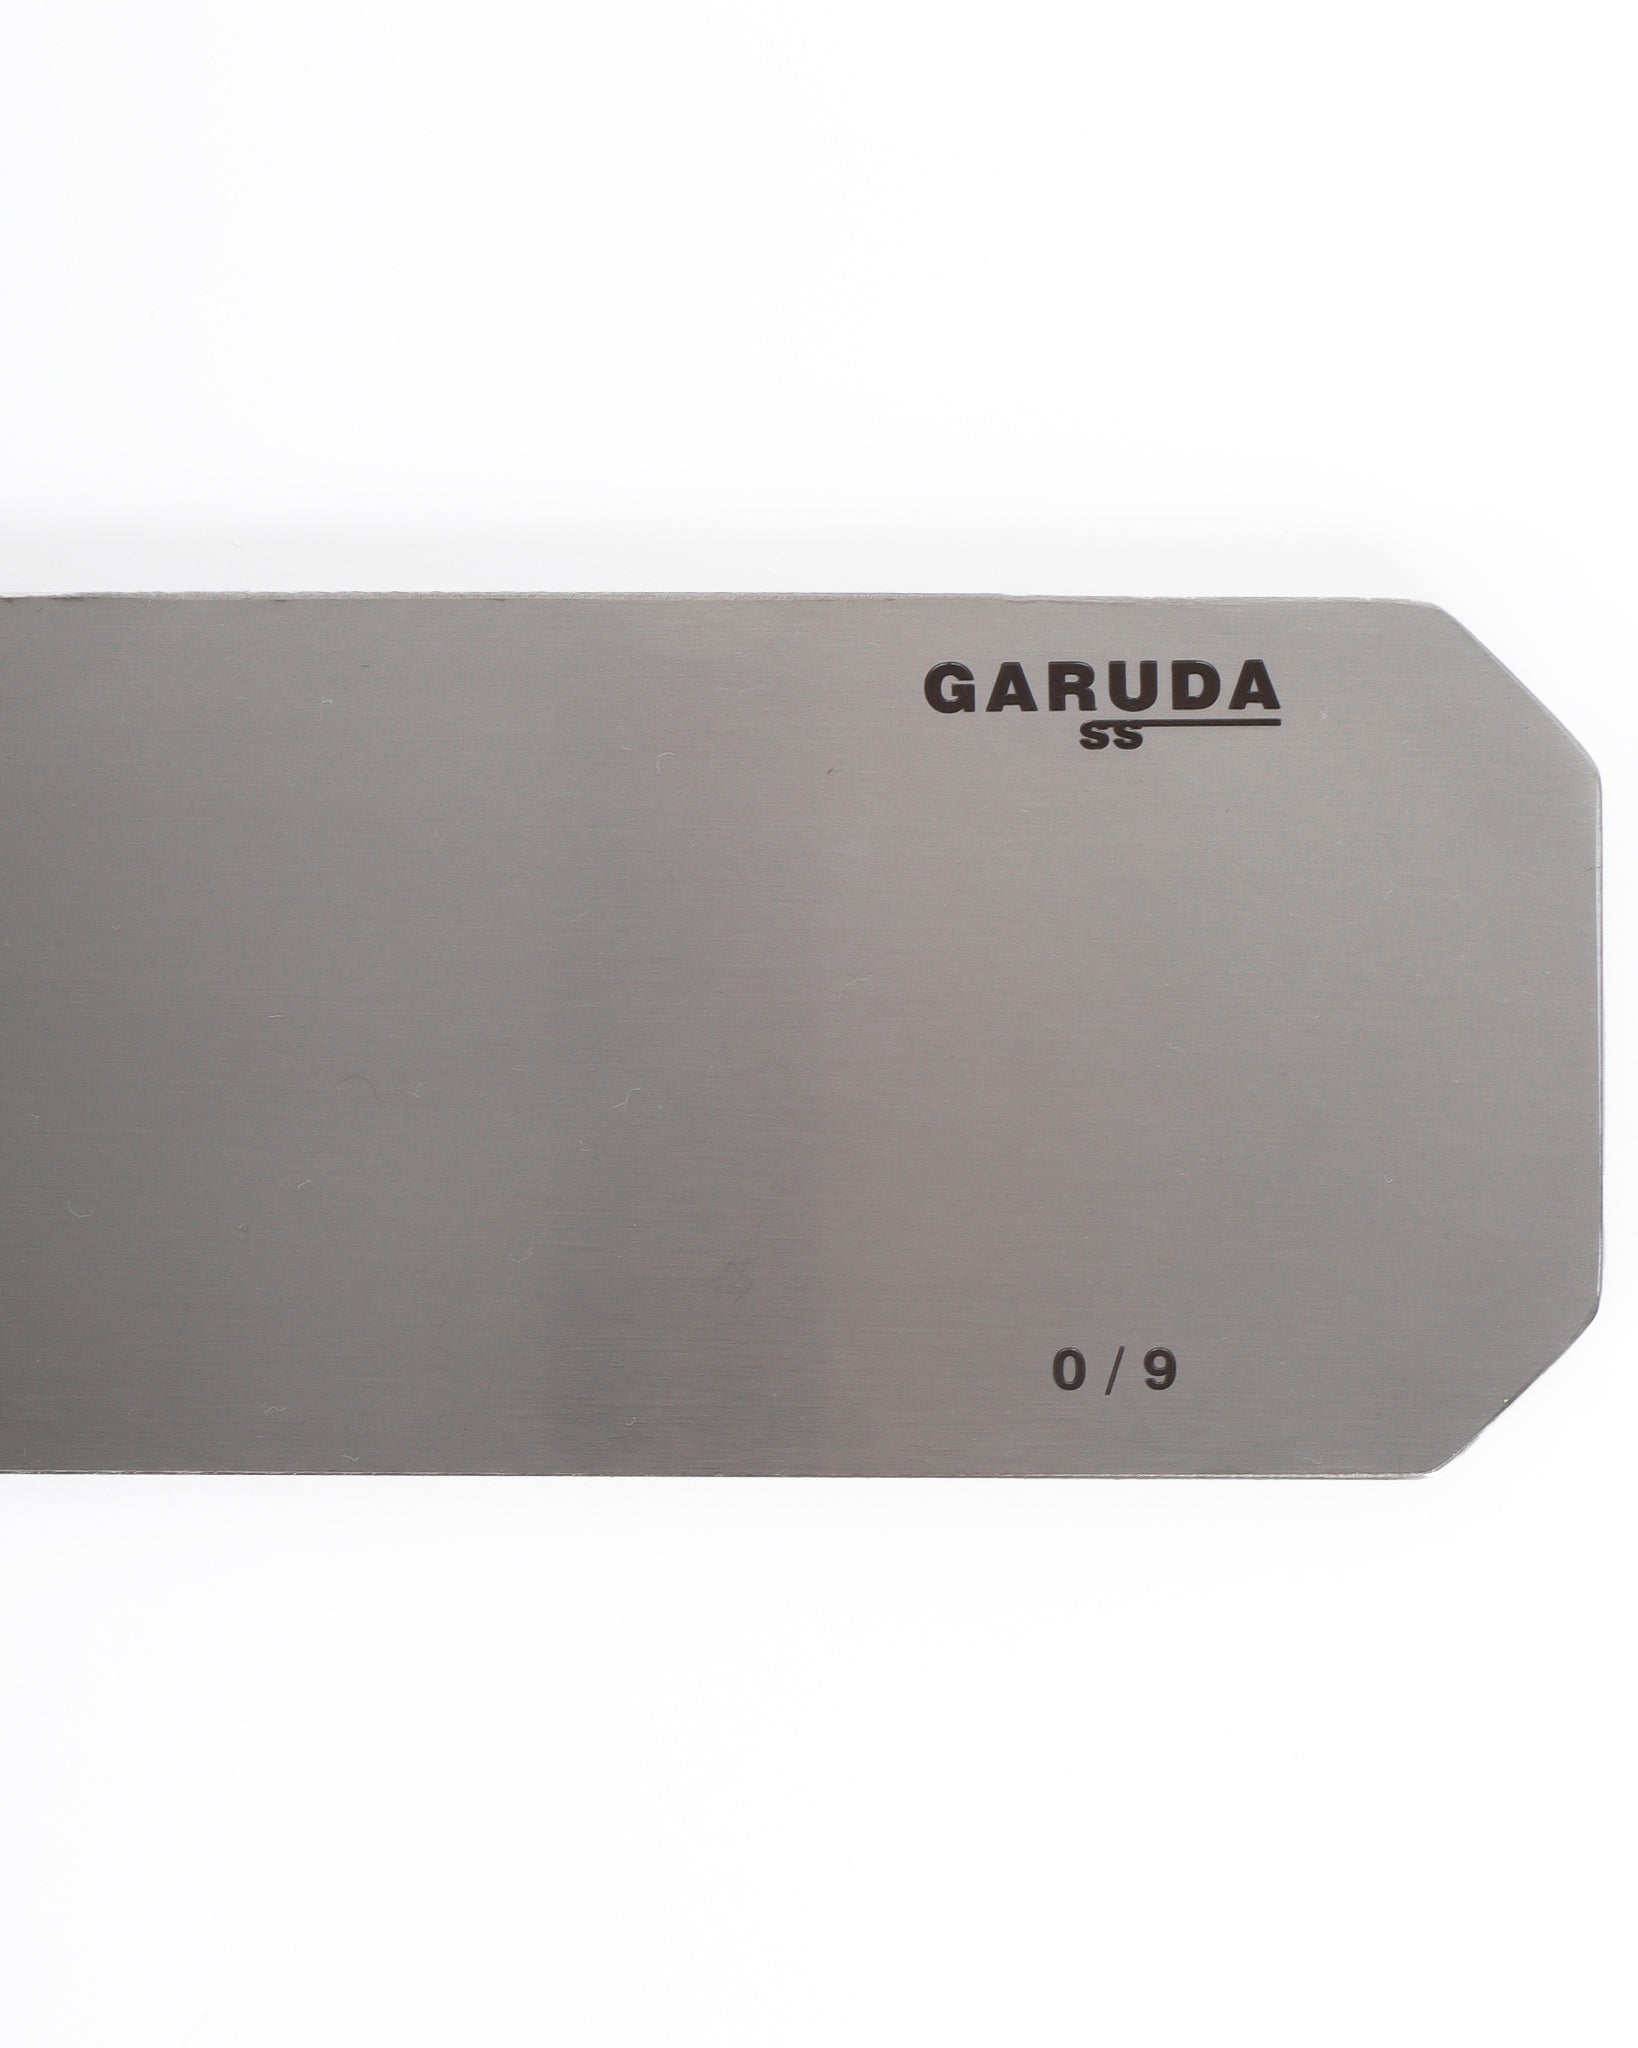 Incense Holder V1 - Limited Edition - GARUDA